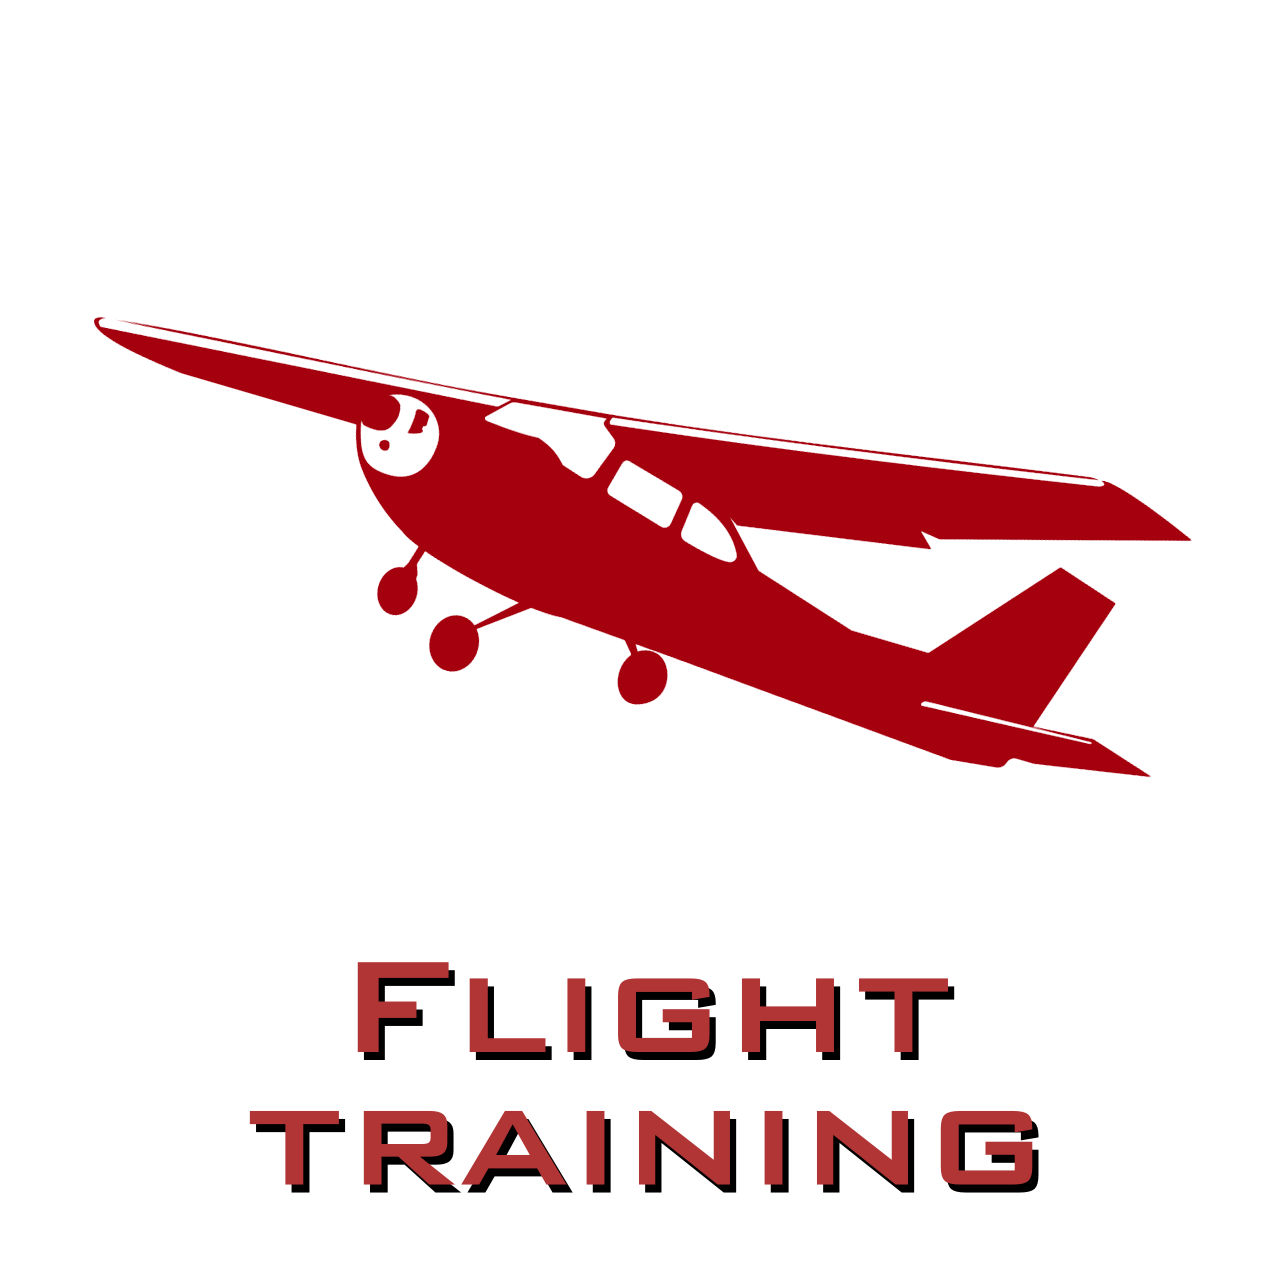 Plane symbolizes fight training